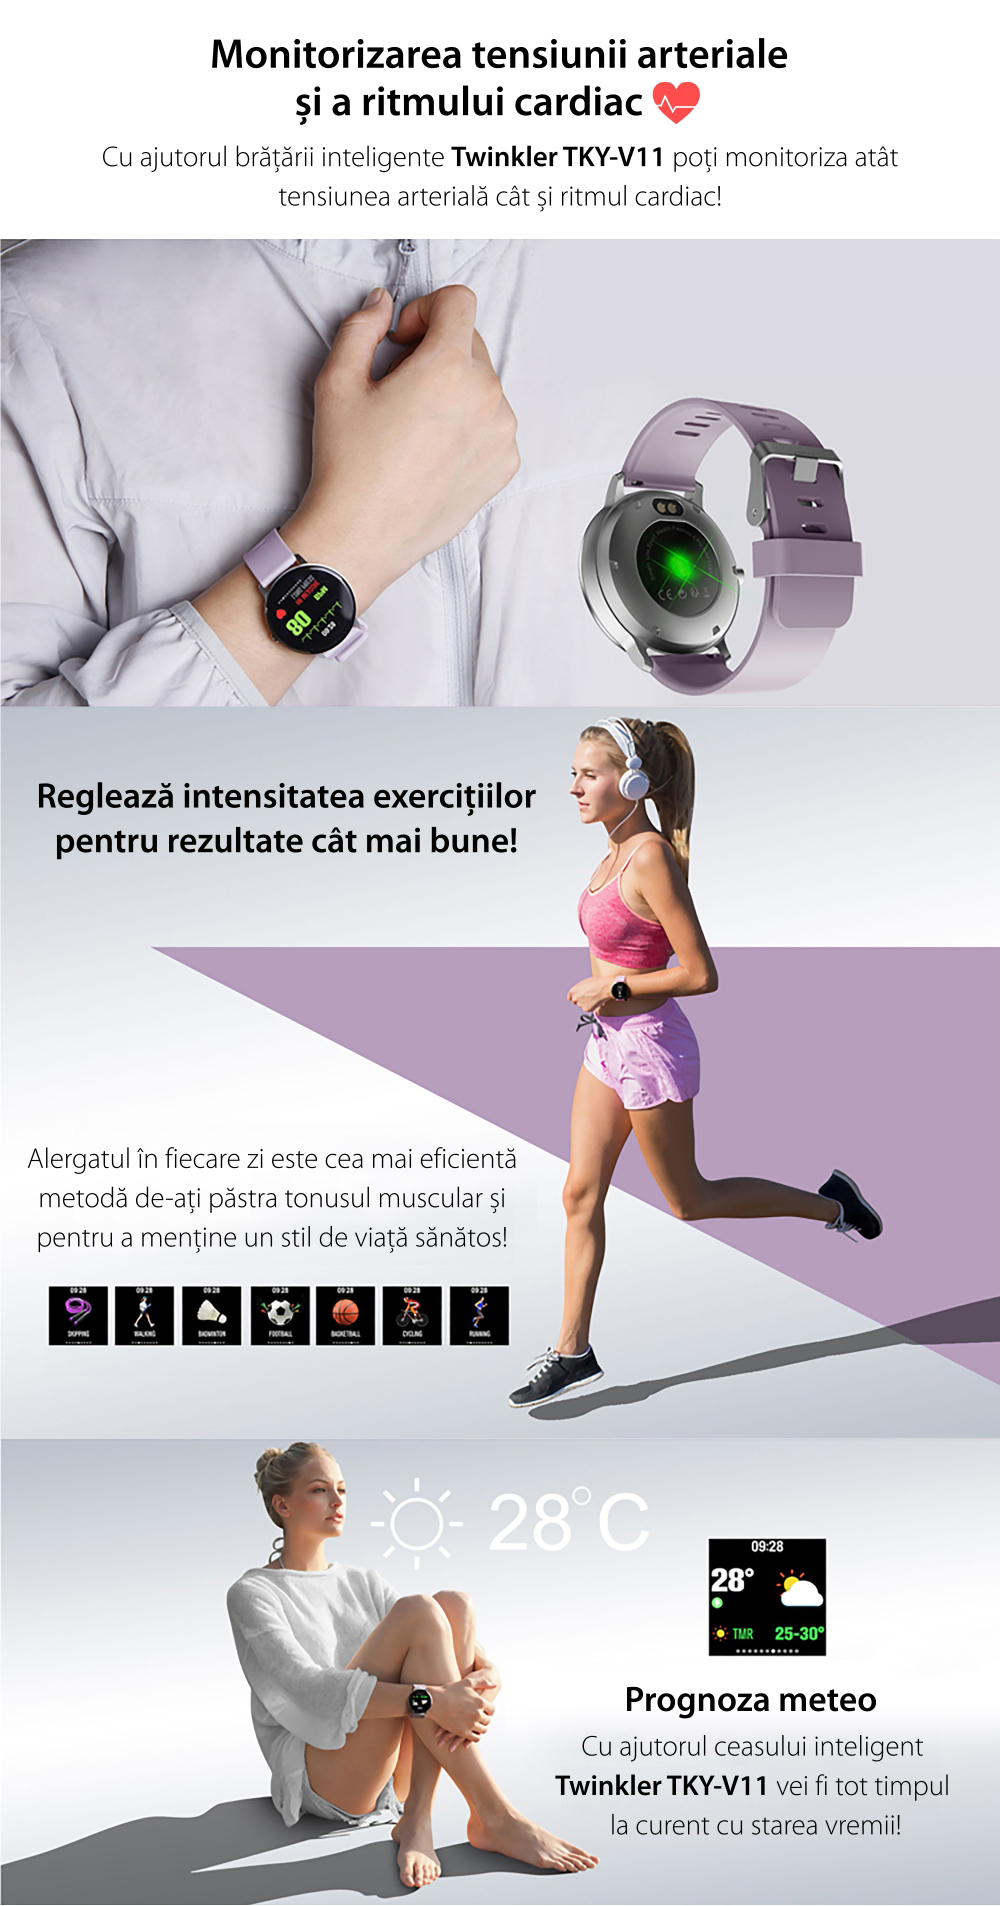 Ceas Smartwatch TKY-V11 cu Functie de monitorizare ritm cardiac, Tensiune arteriala, Nivel oxigen,  Monitorizare somn, Notificari Apel/ SMS, Negru